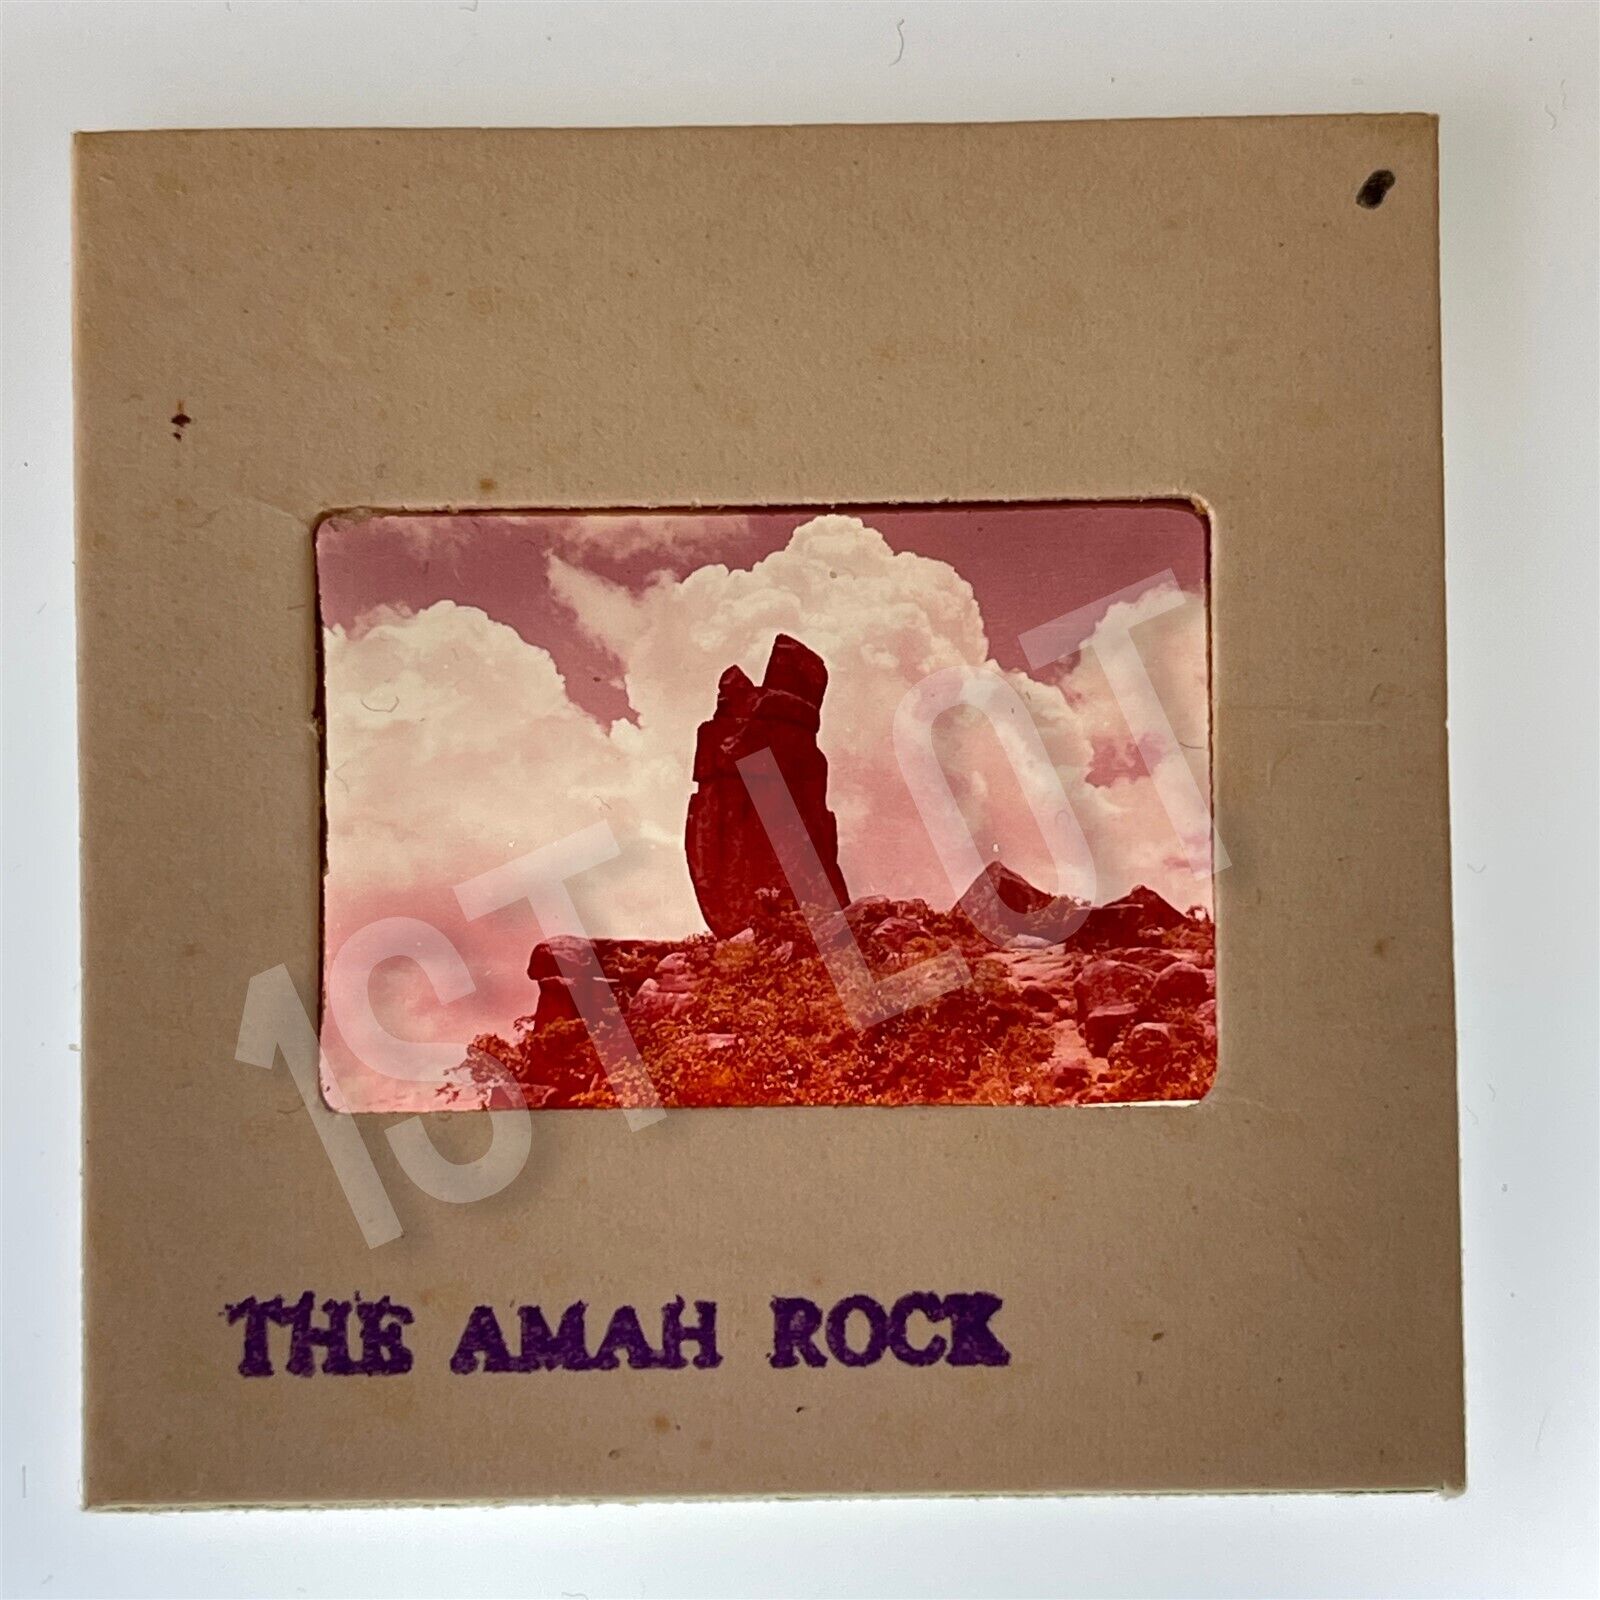 35mm Slide - The Amah Rock Formation in Hong Kong - Iconic Natural Landmark